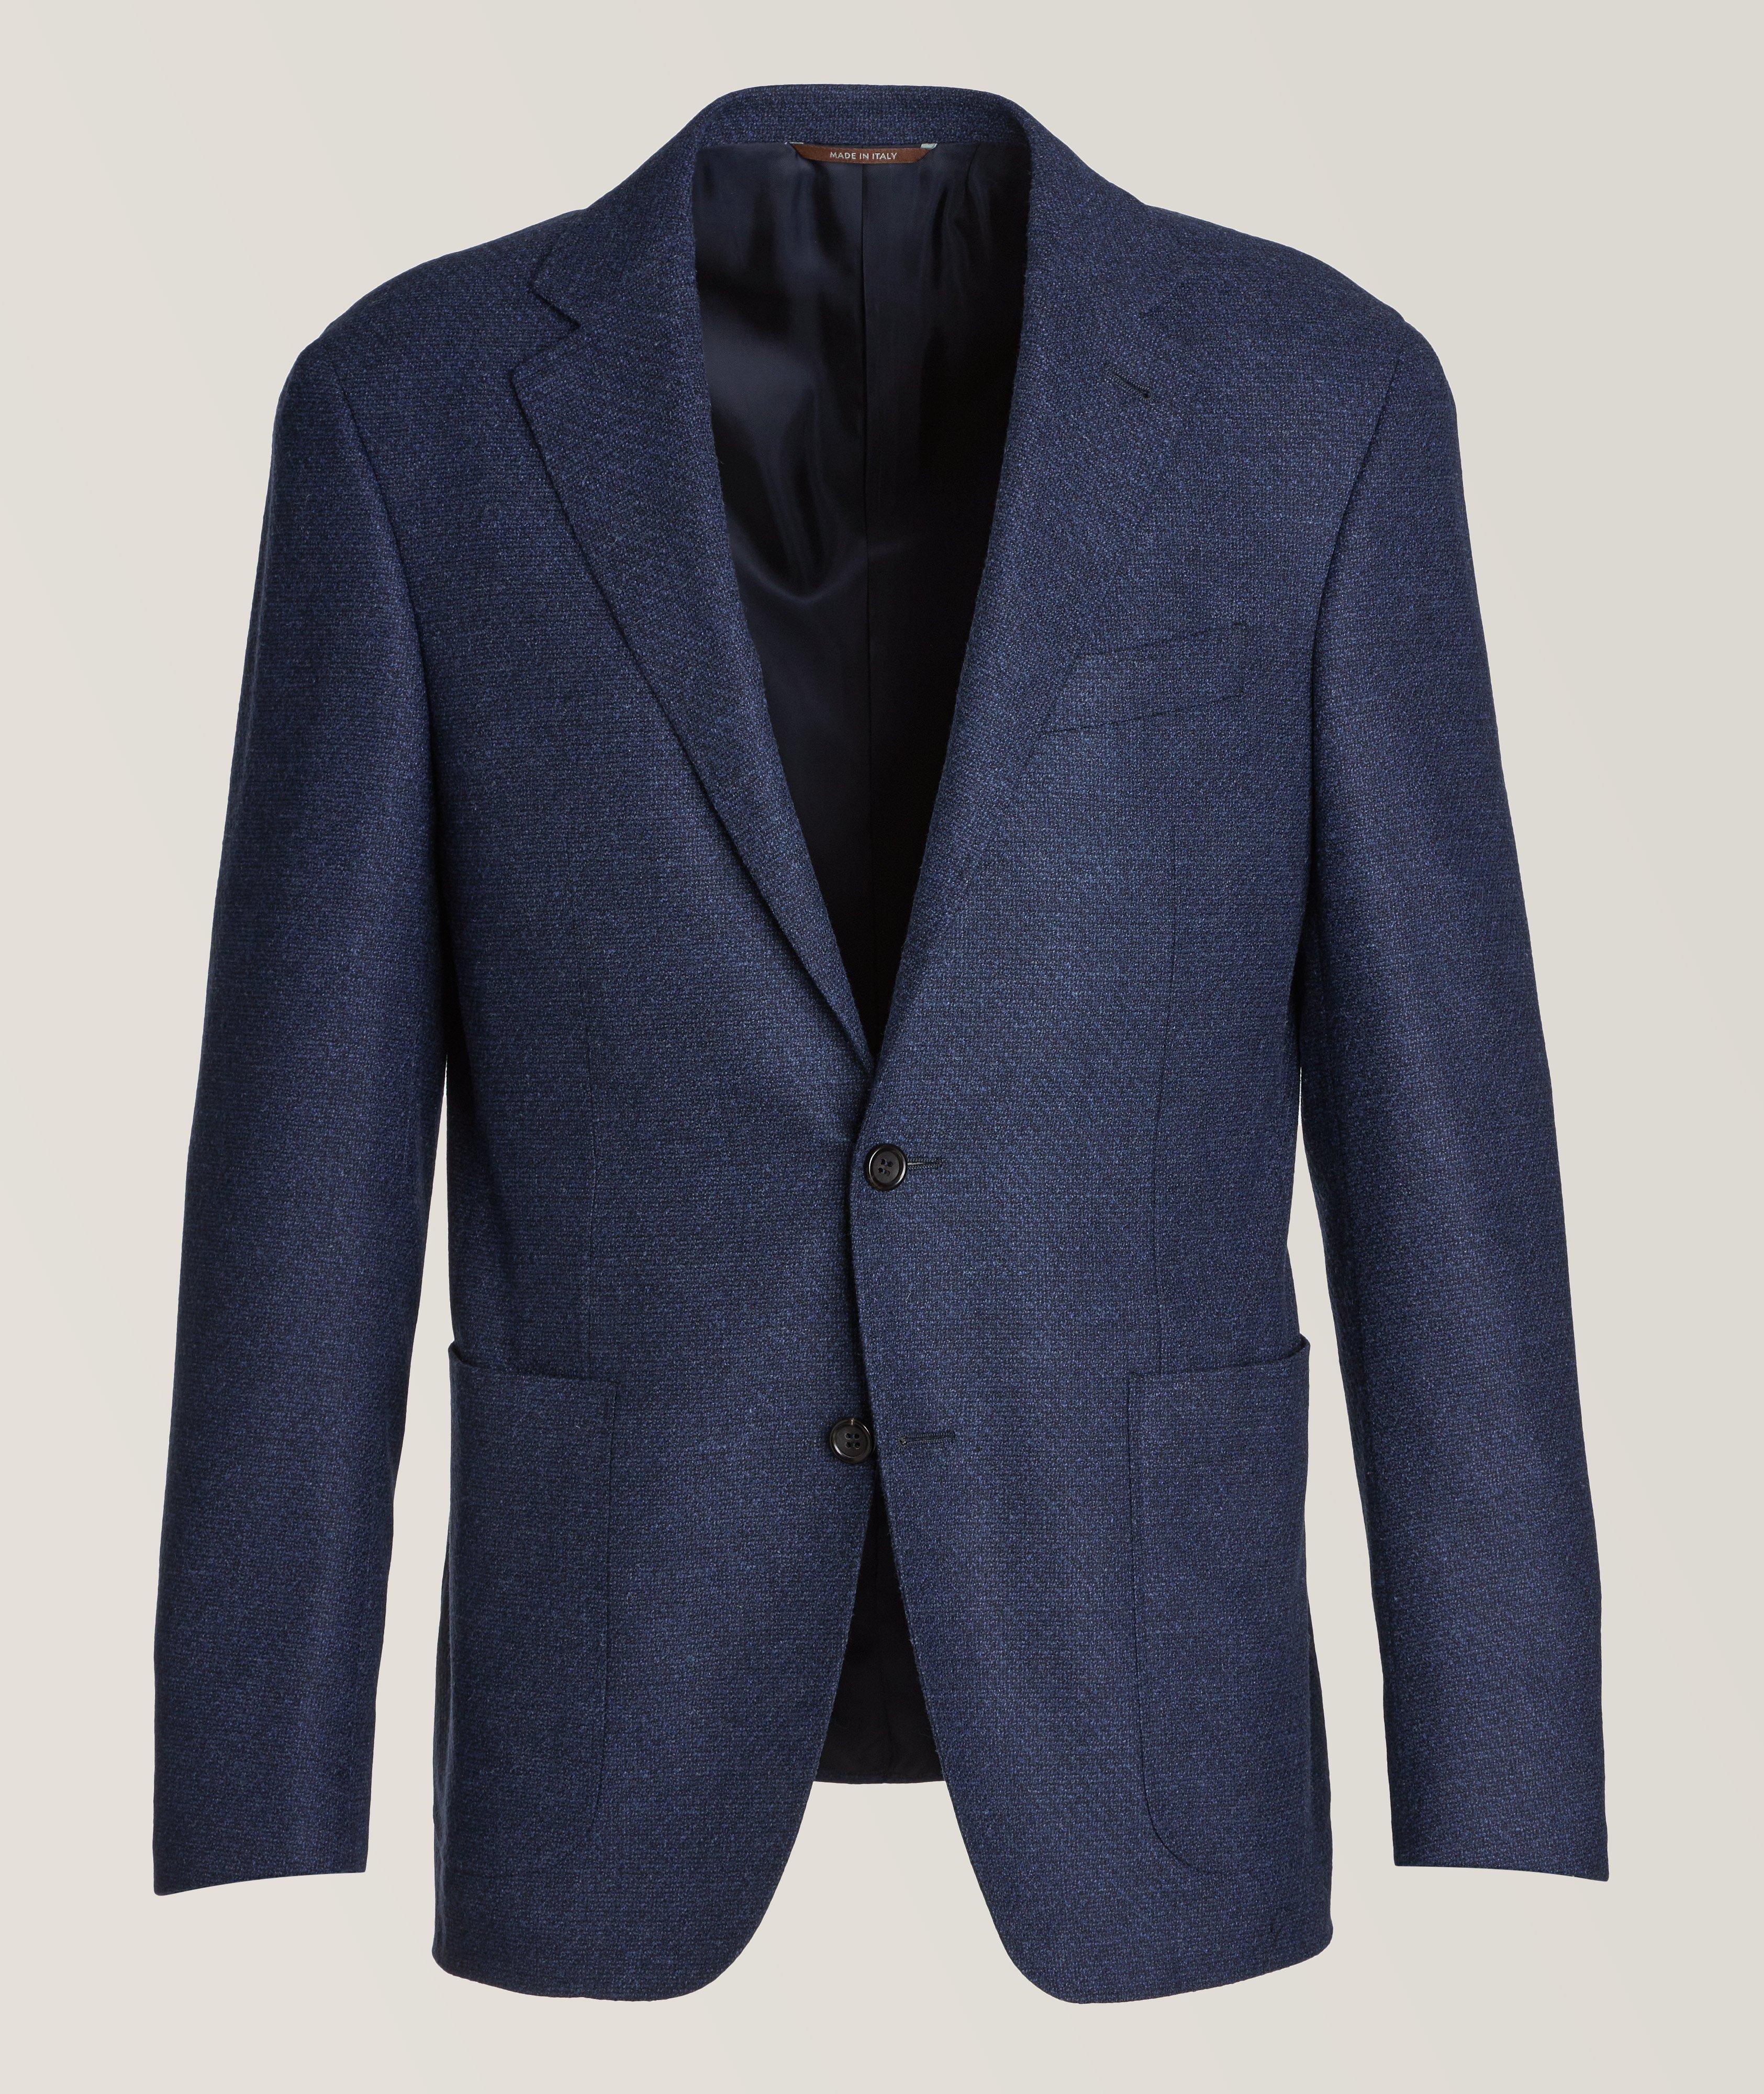 Kei Textured Stretch-Wool Linen Blend Sport Jacket image 0